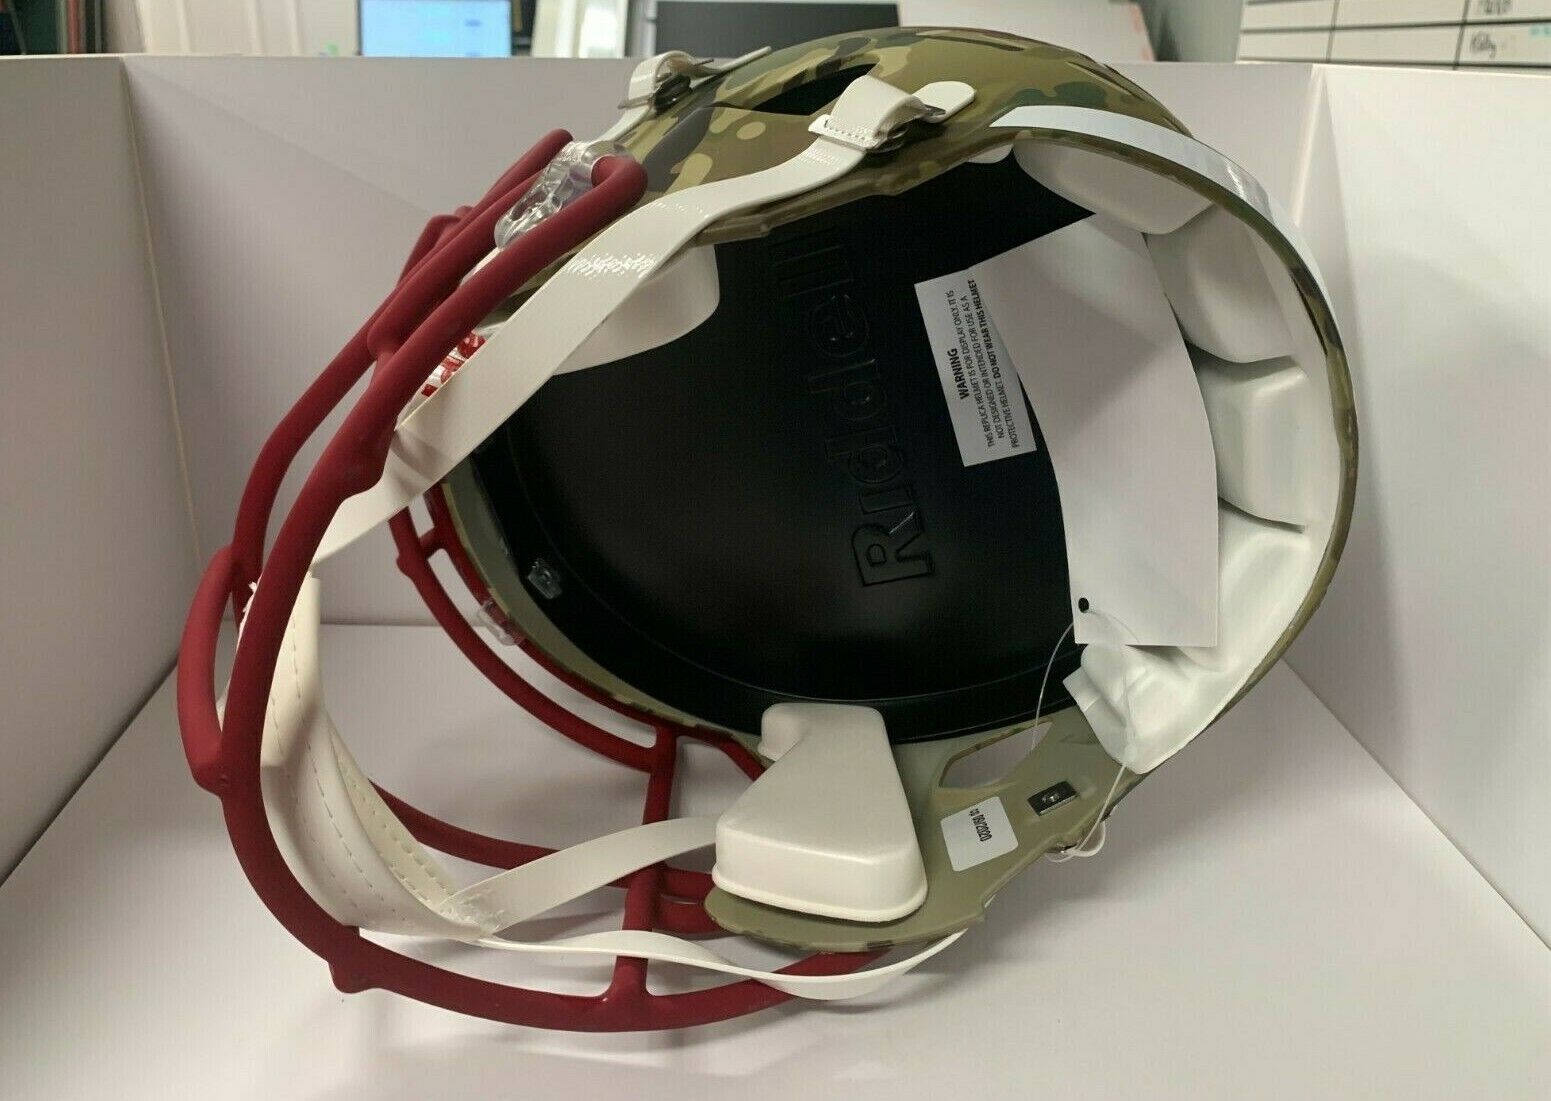 Florida State Camouflage Full Size Replica Helmet Excellent Original Box